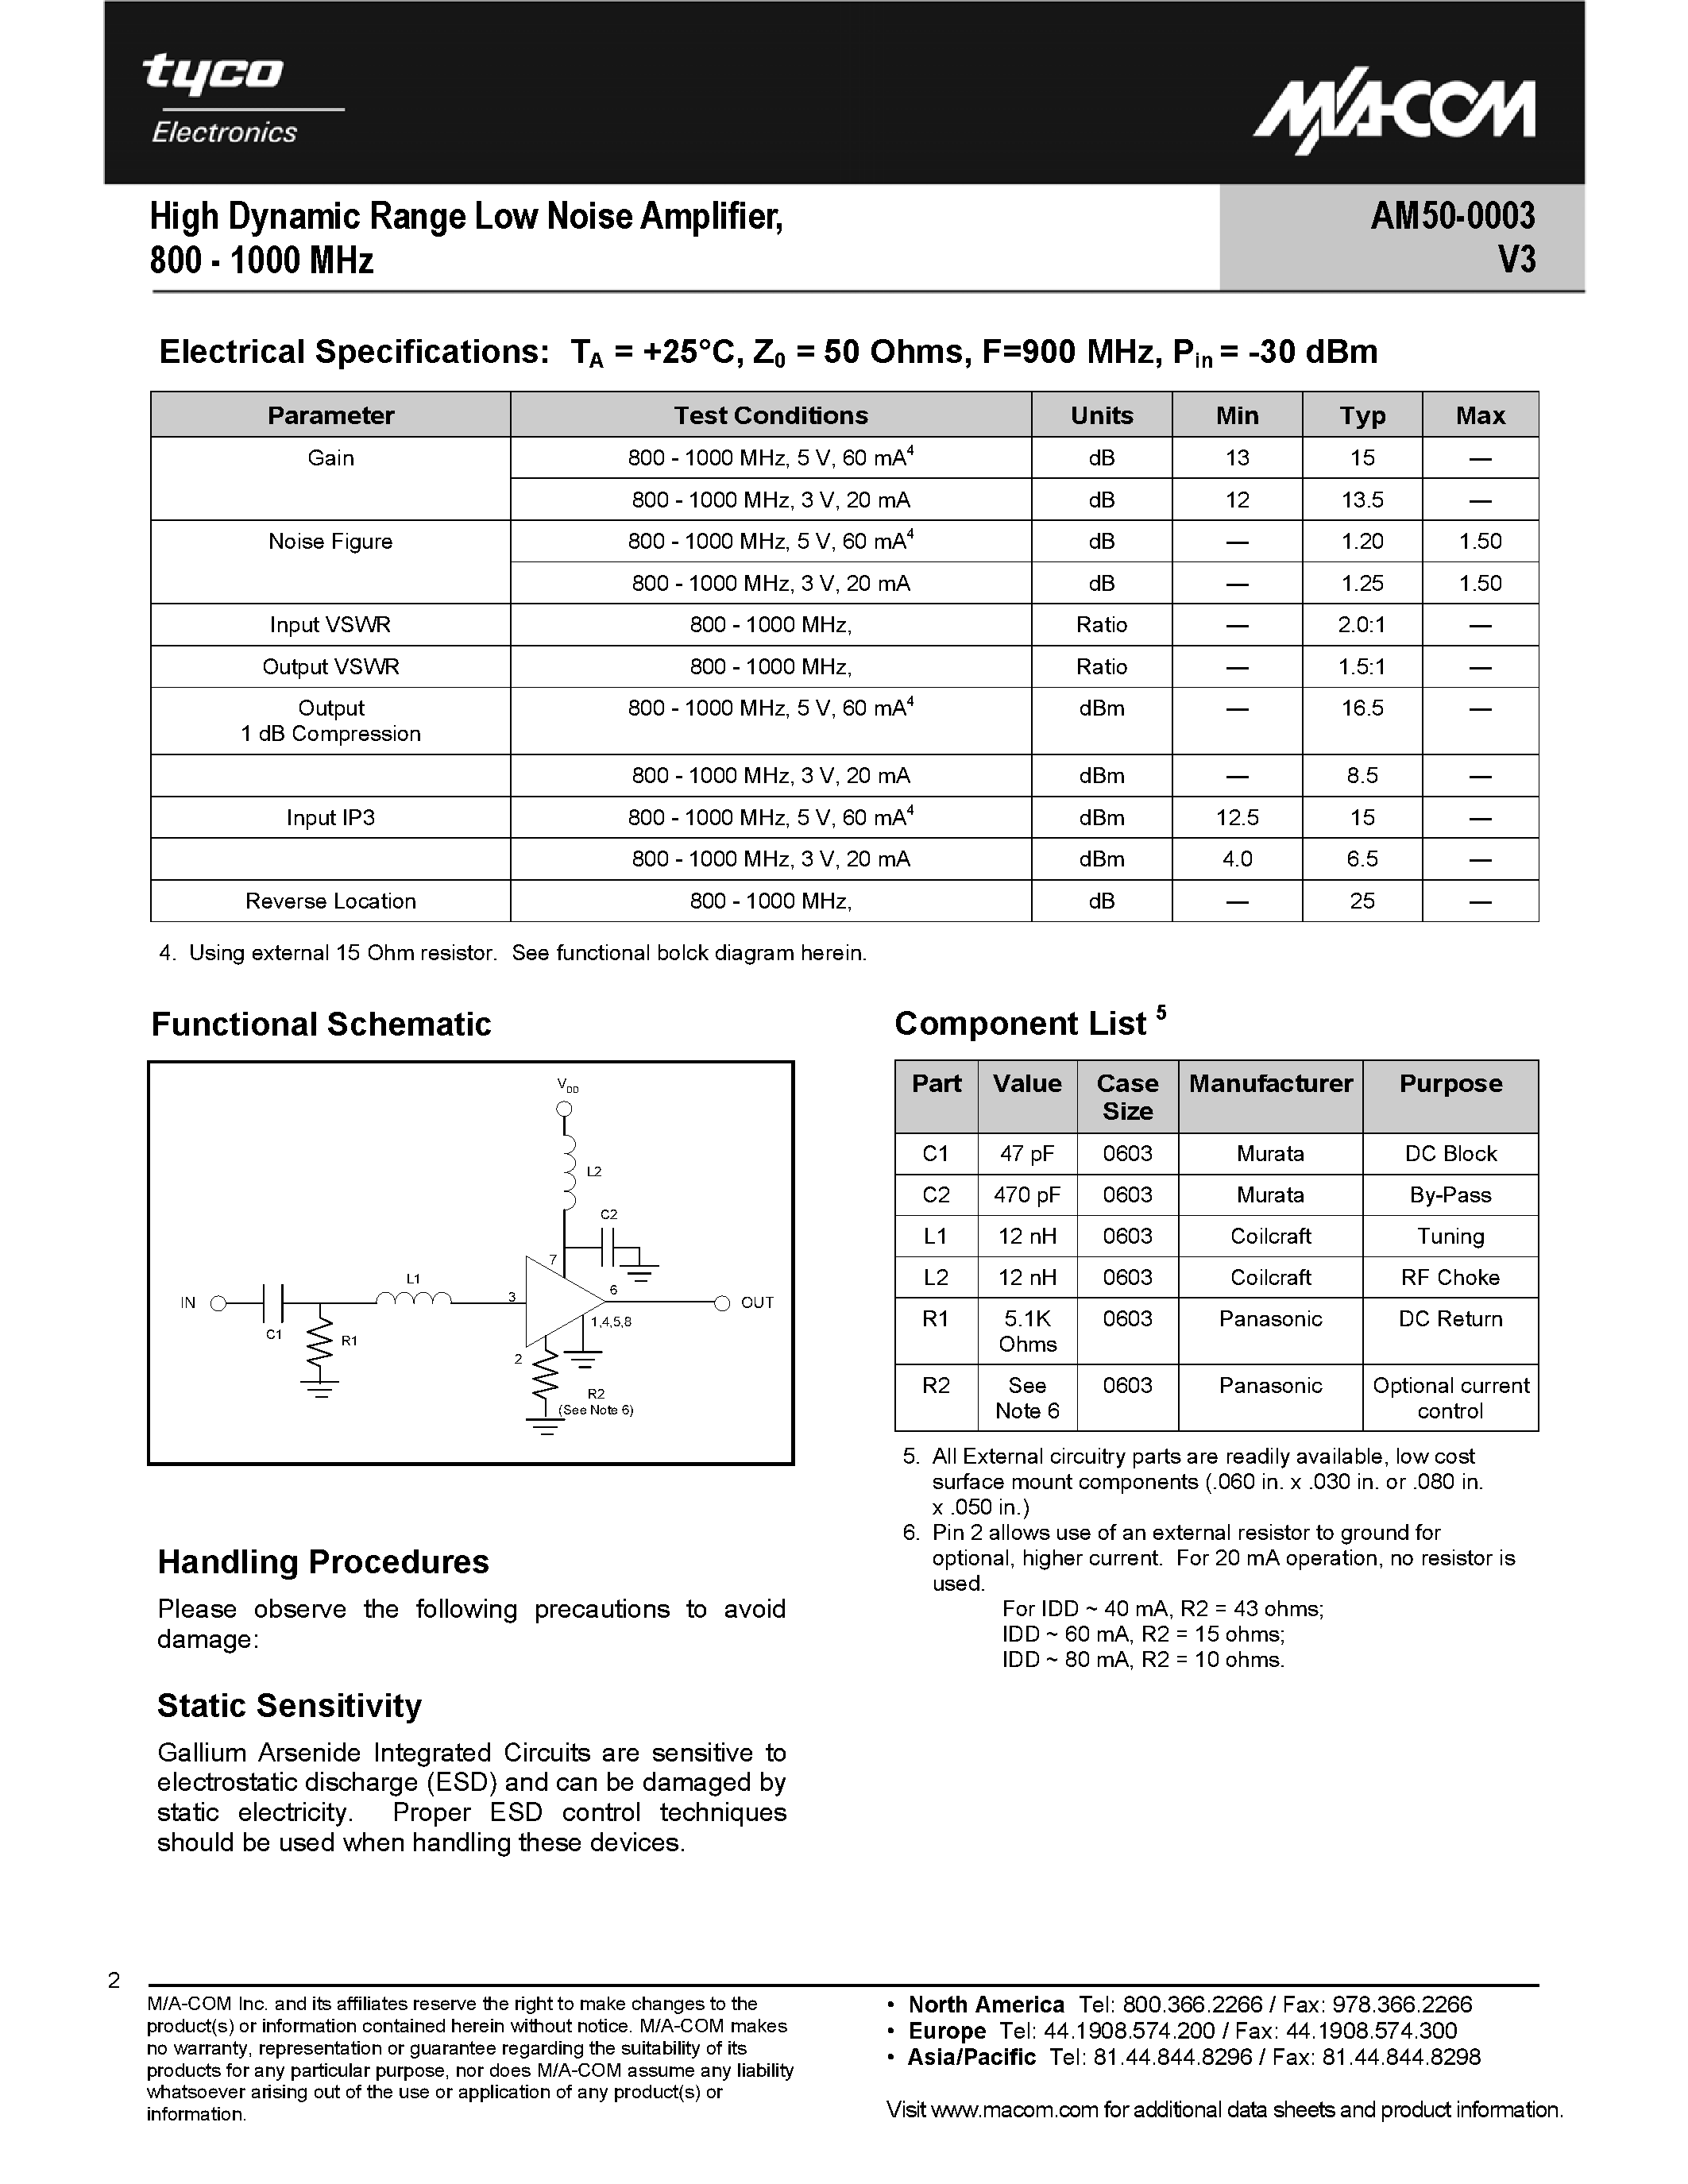 Datasheet AM50-0003V3 - High Dynamic Range Low Noise Amplifier page 2